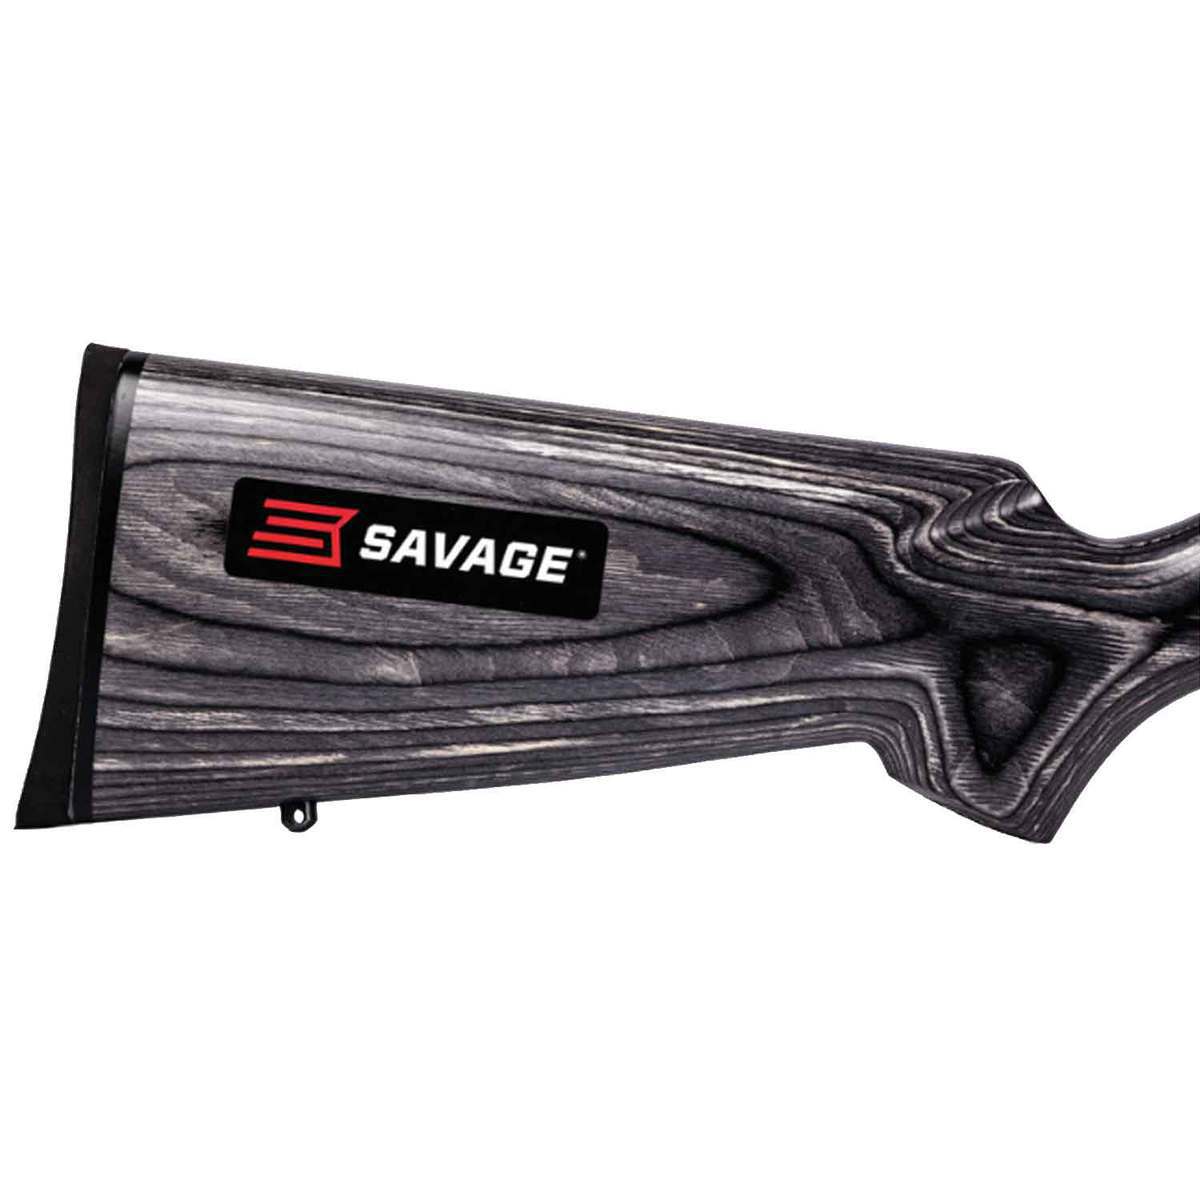 Savage A17 Target Sporter Black Semi Automatic Rifle 17 Hmr 22in